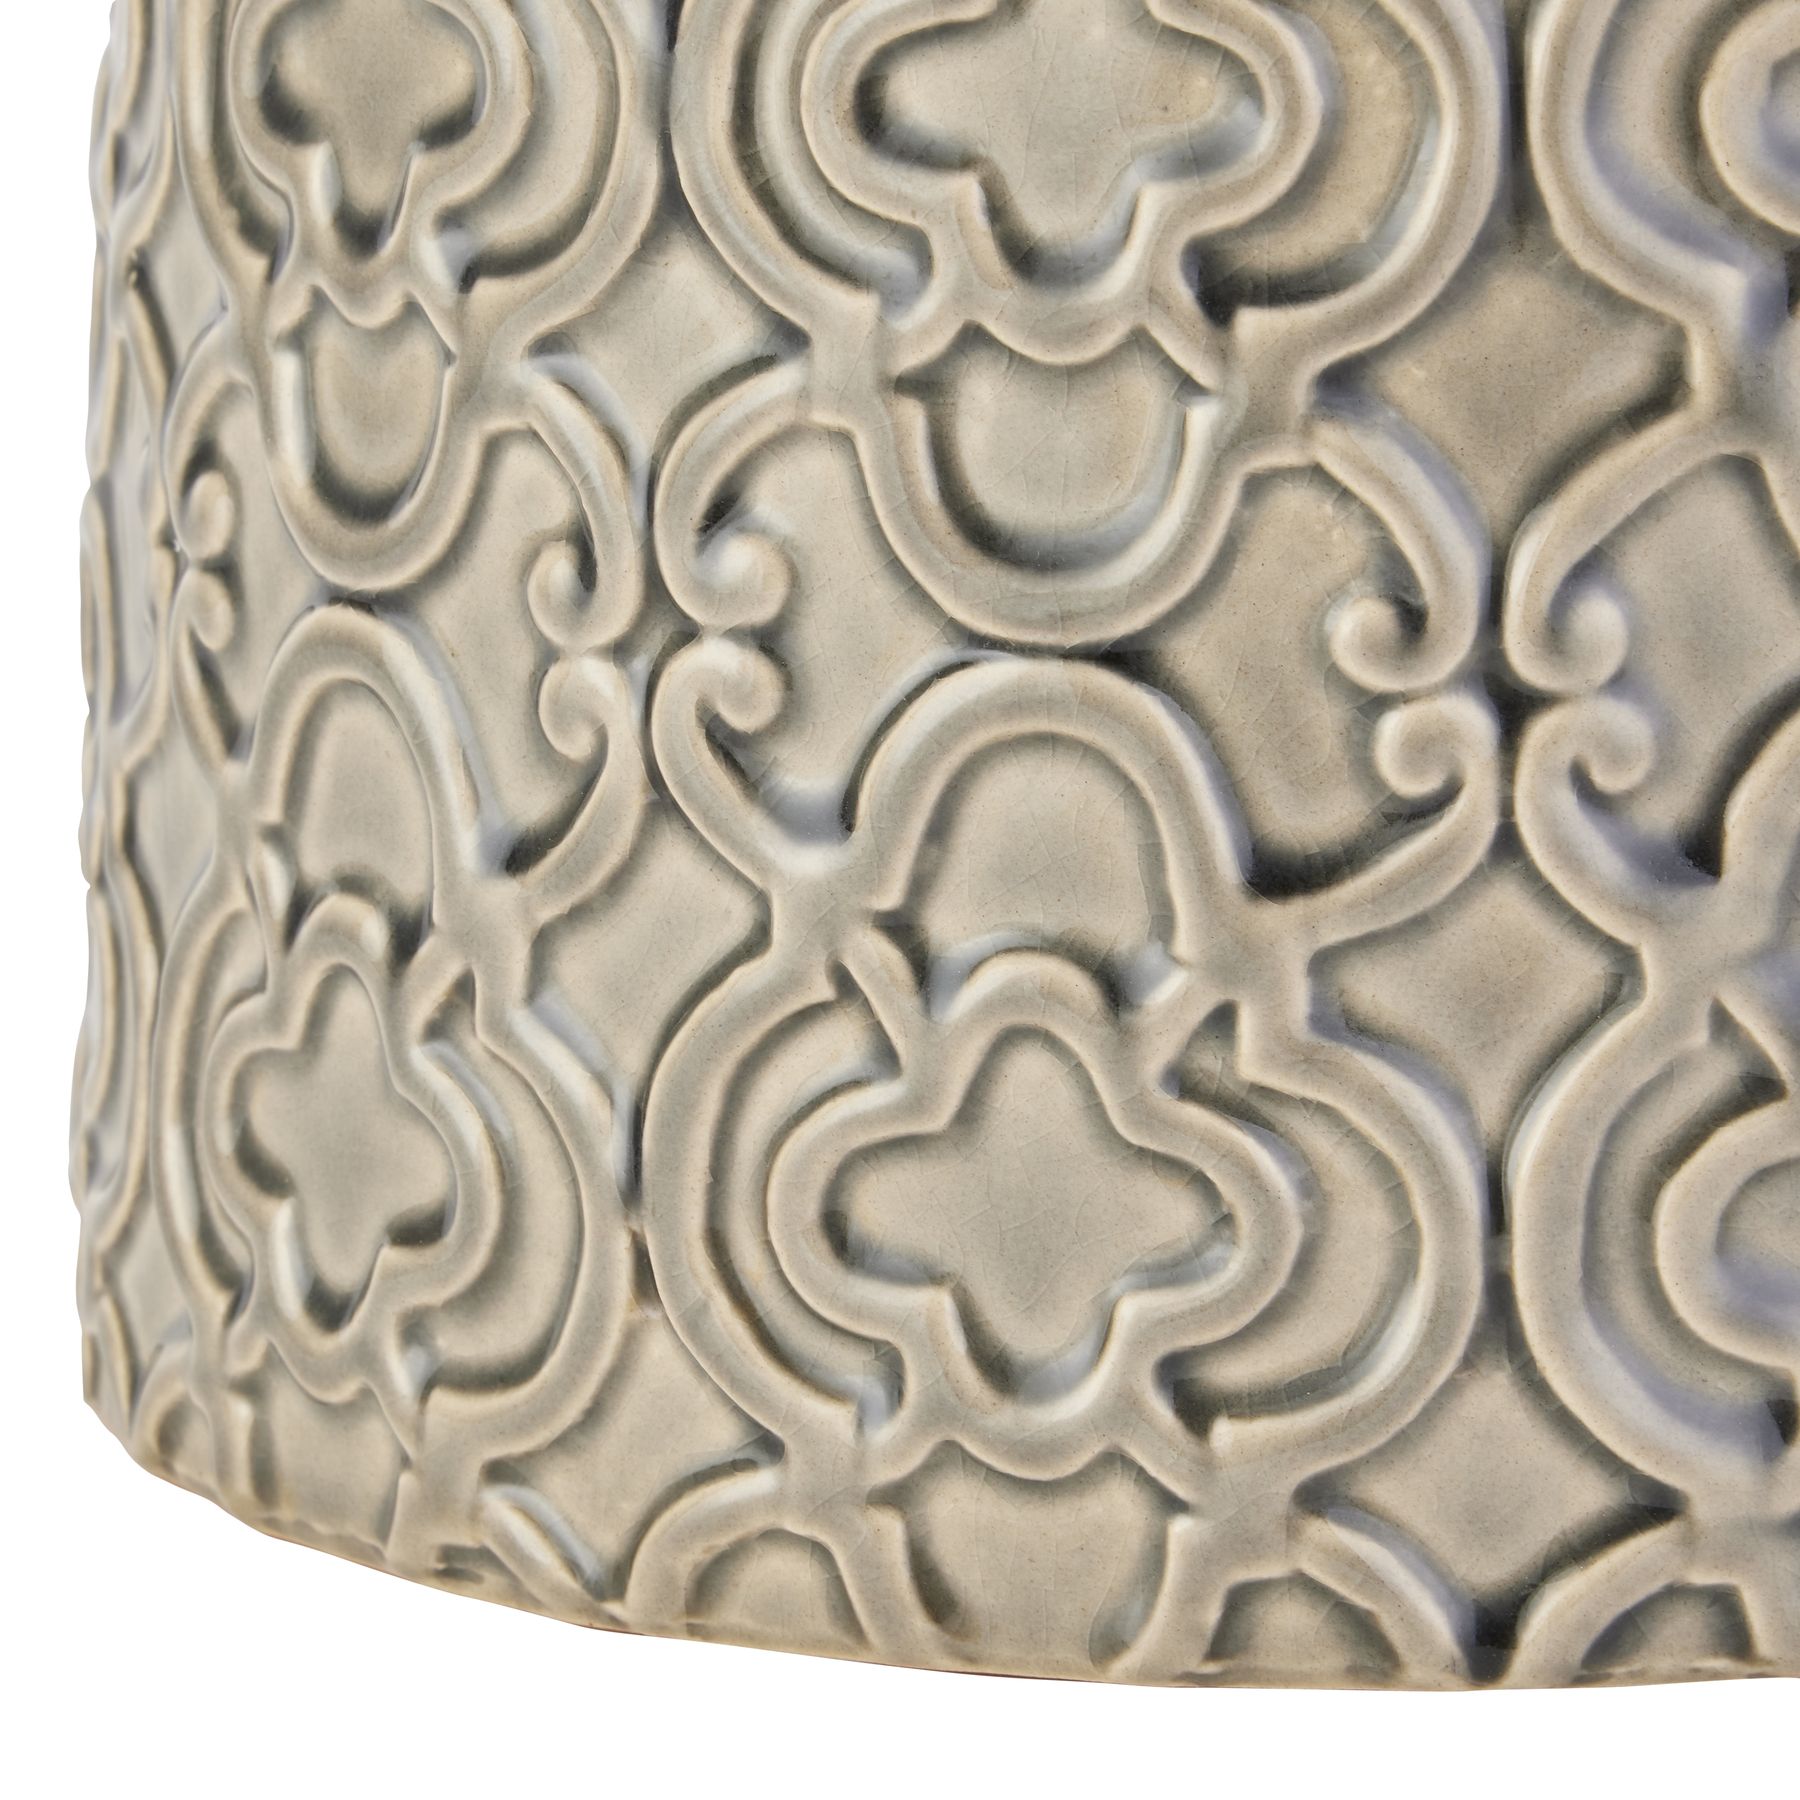 Seville Collection Grey Marrakesh Urn - Image 2